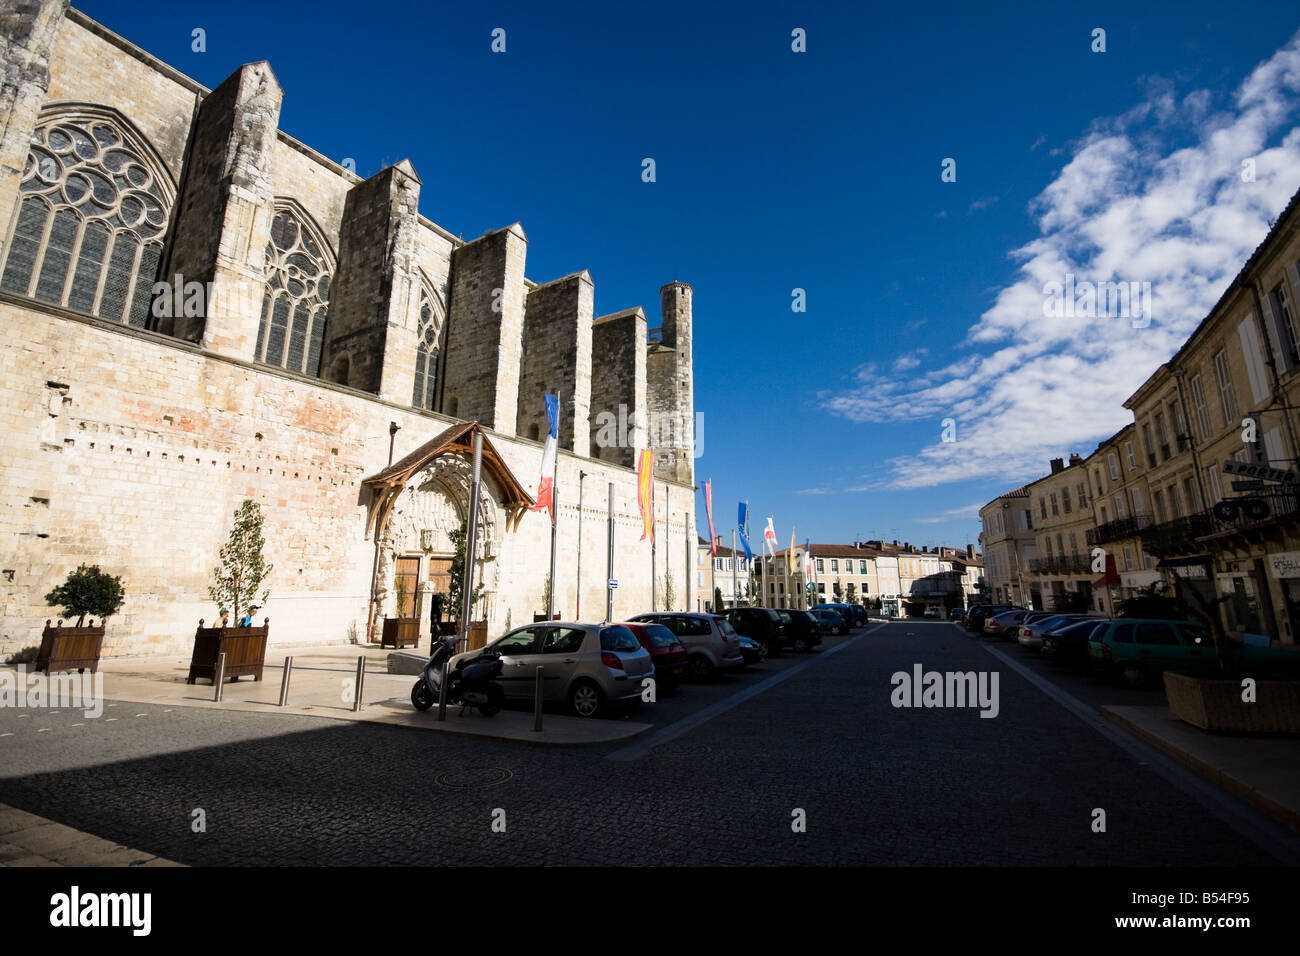 Cattedrale di condom, Gers Francia meridionale Foto Stock